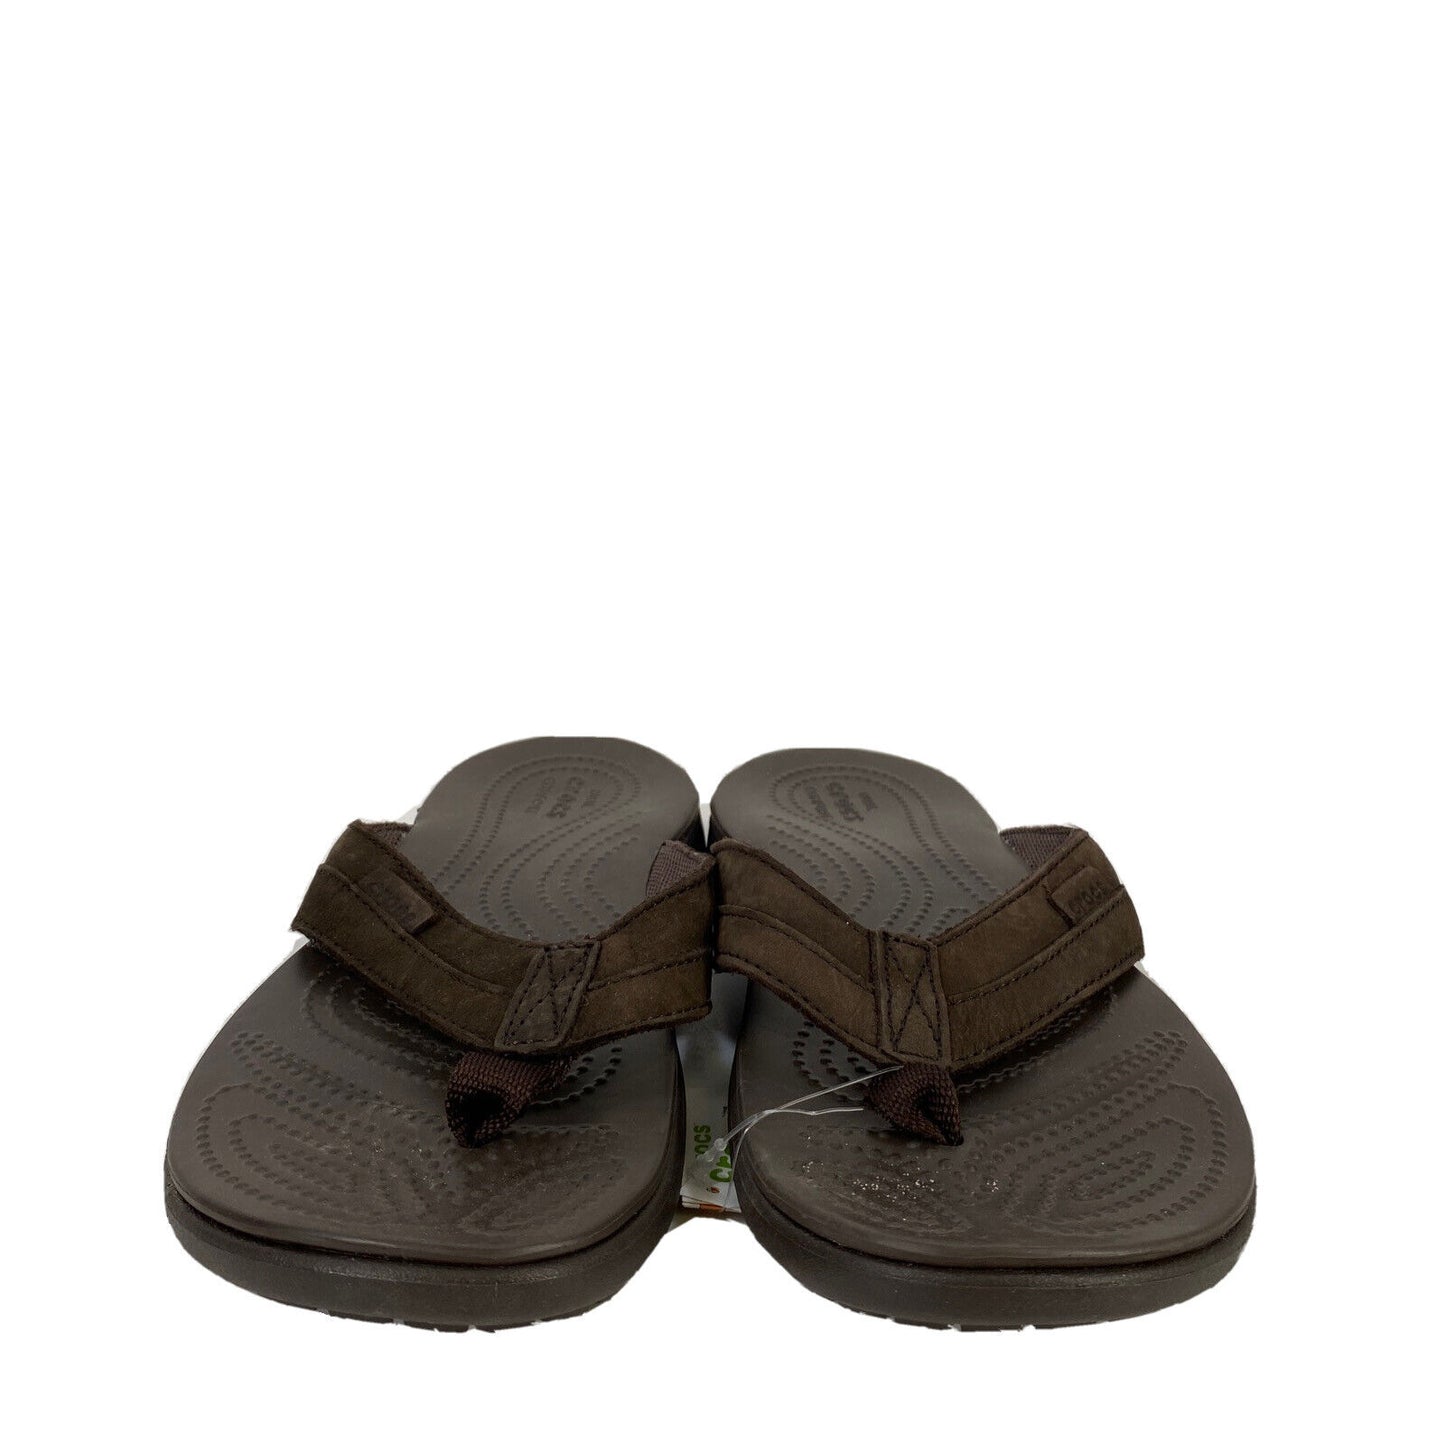 NEW Crocs Men's Brown Leather Strap Santa Cruz Flip Flops - 7